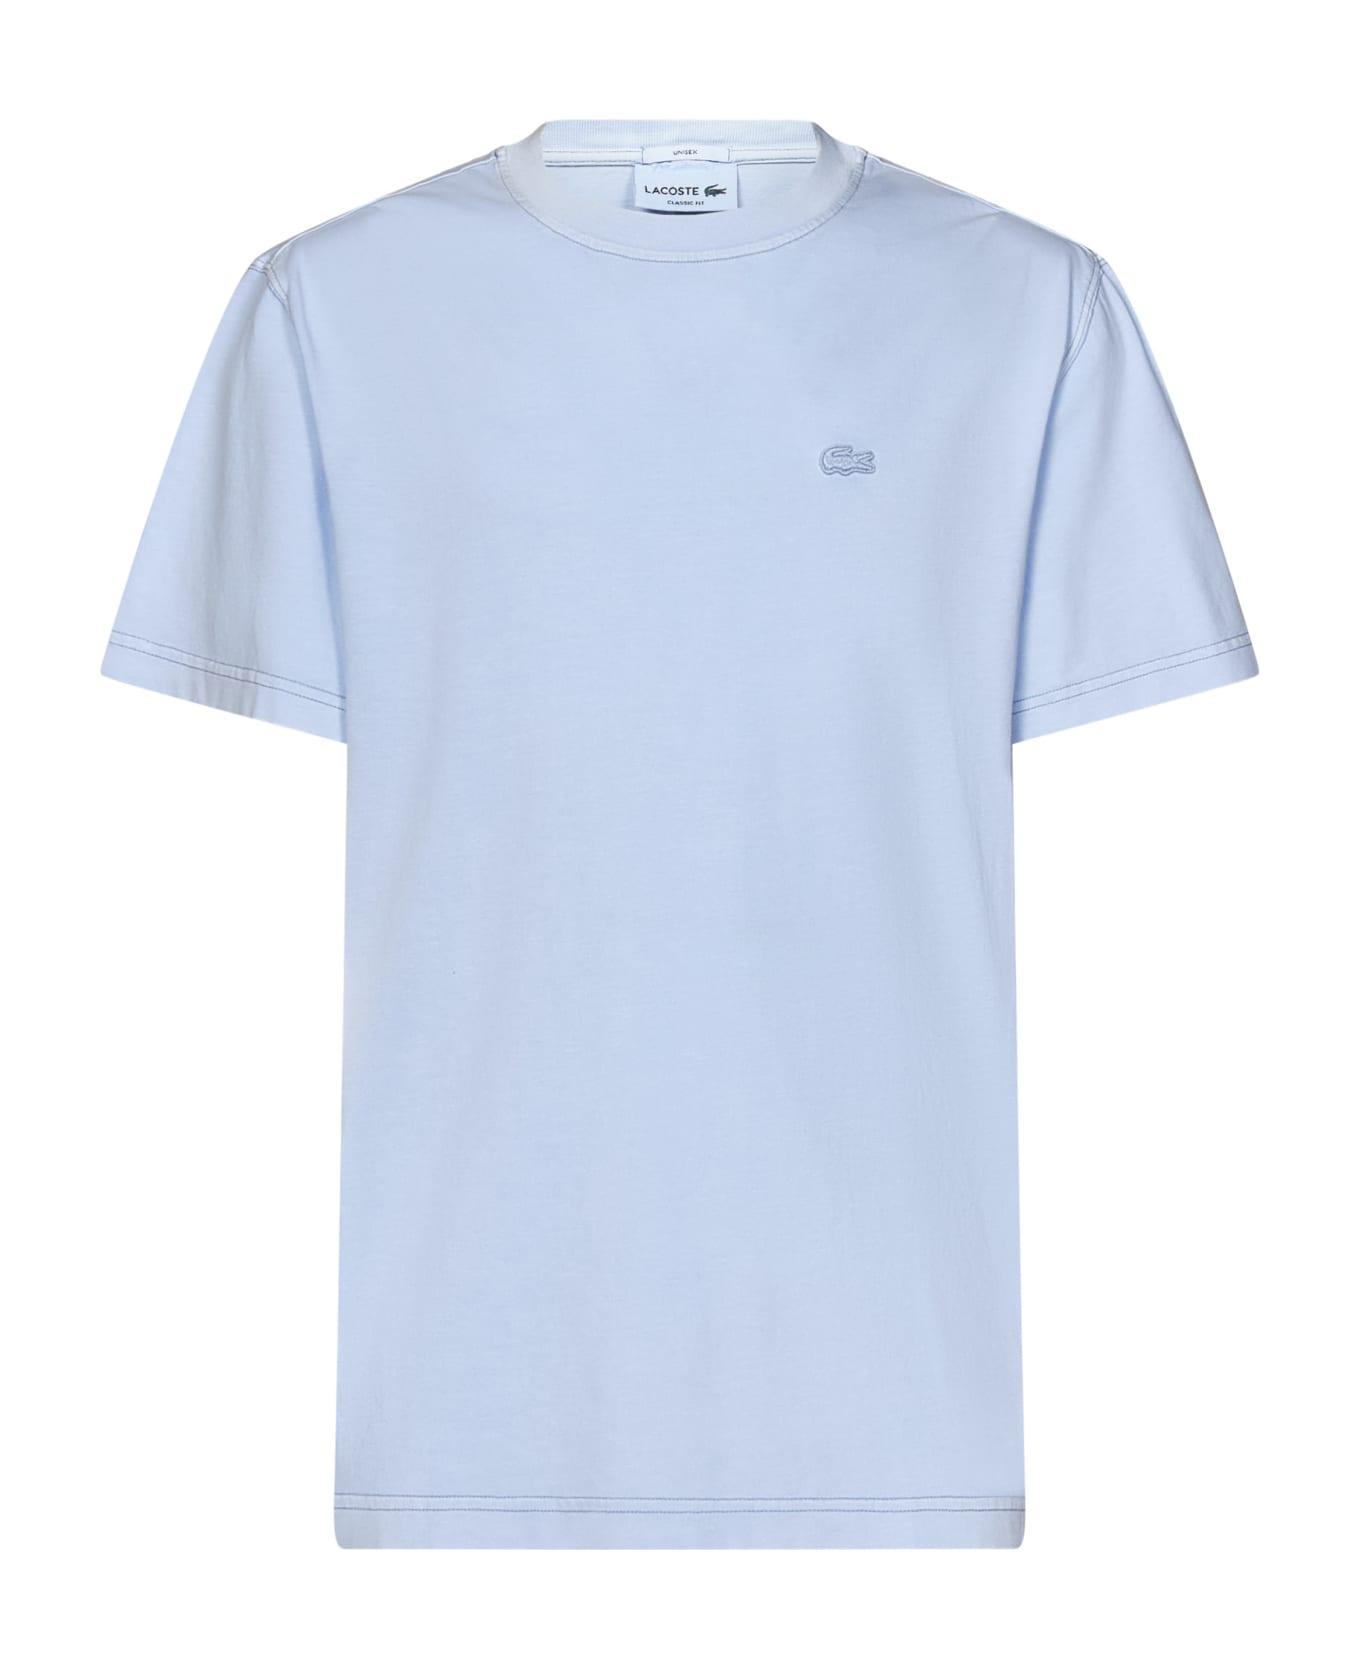 Lacoste T-shirt - Light blue Tシャツ